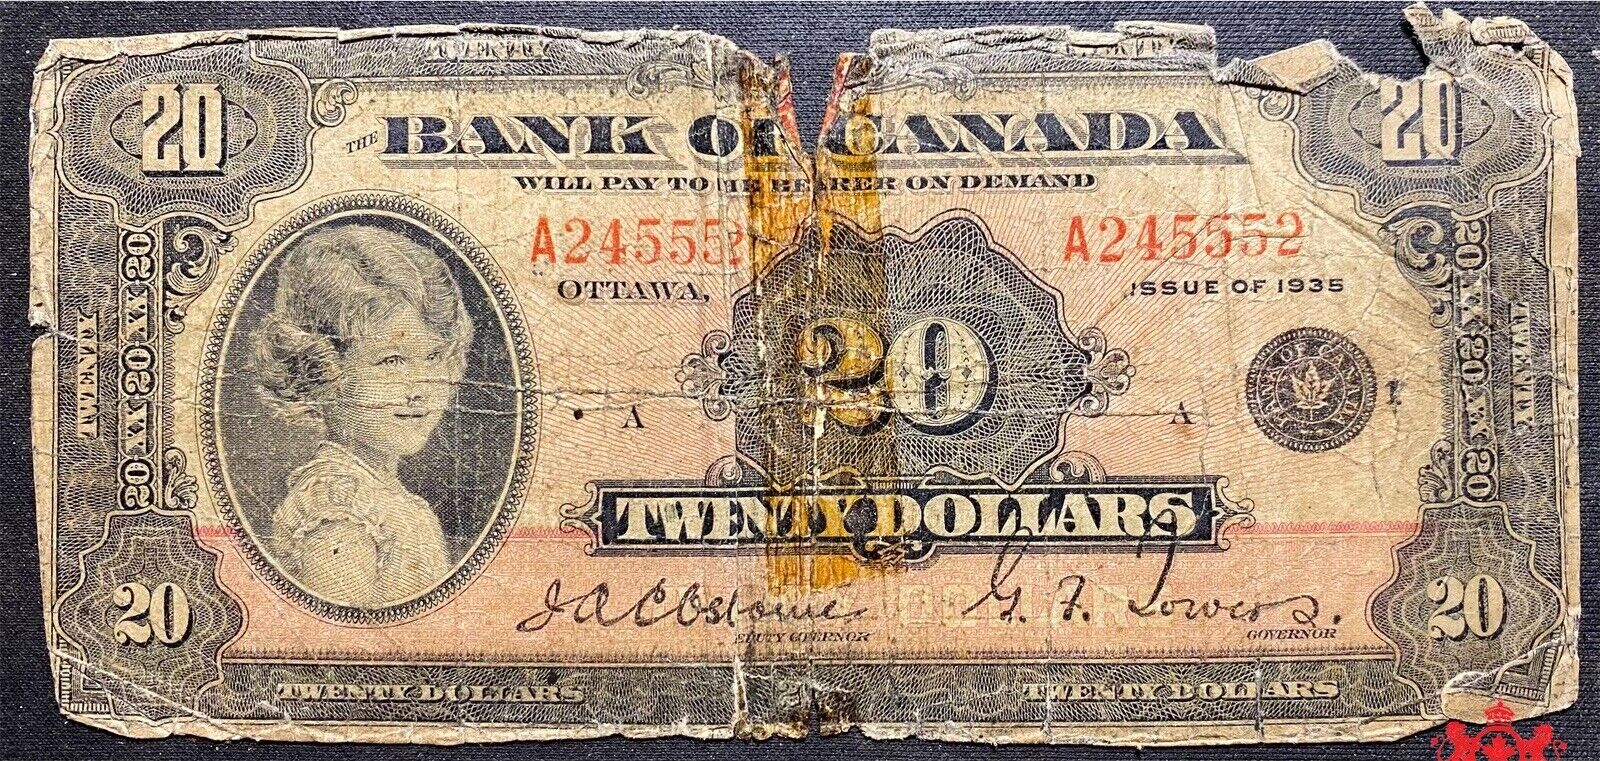 1935 Bank Of Canada $20 English A245552 - Circulated - Damages